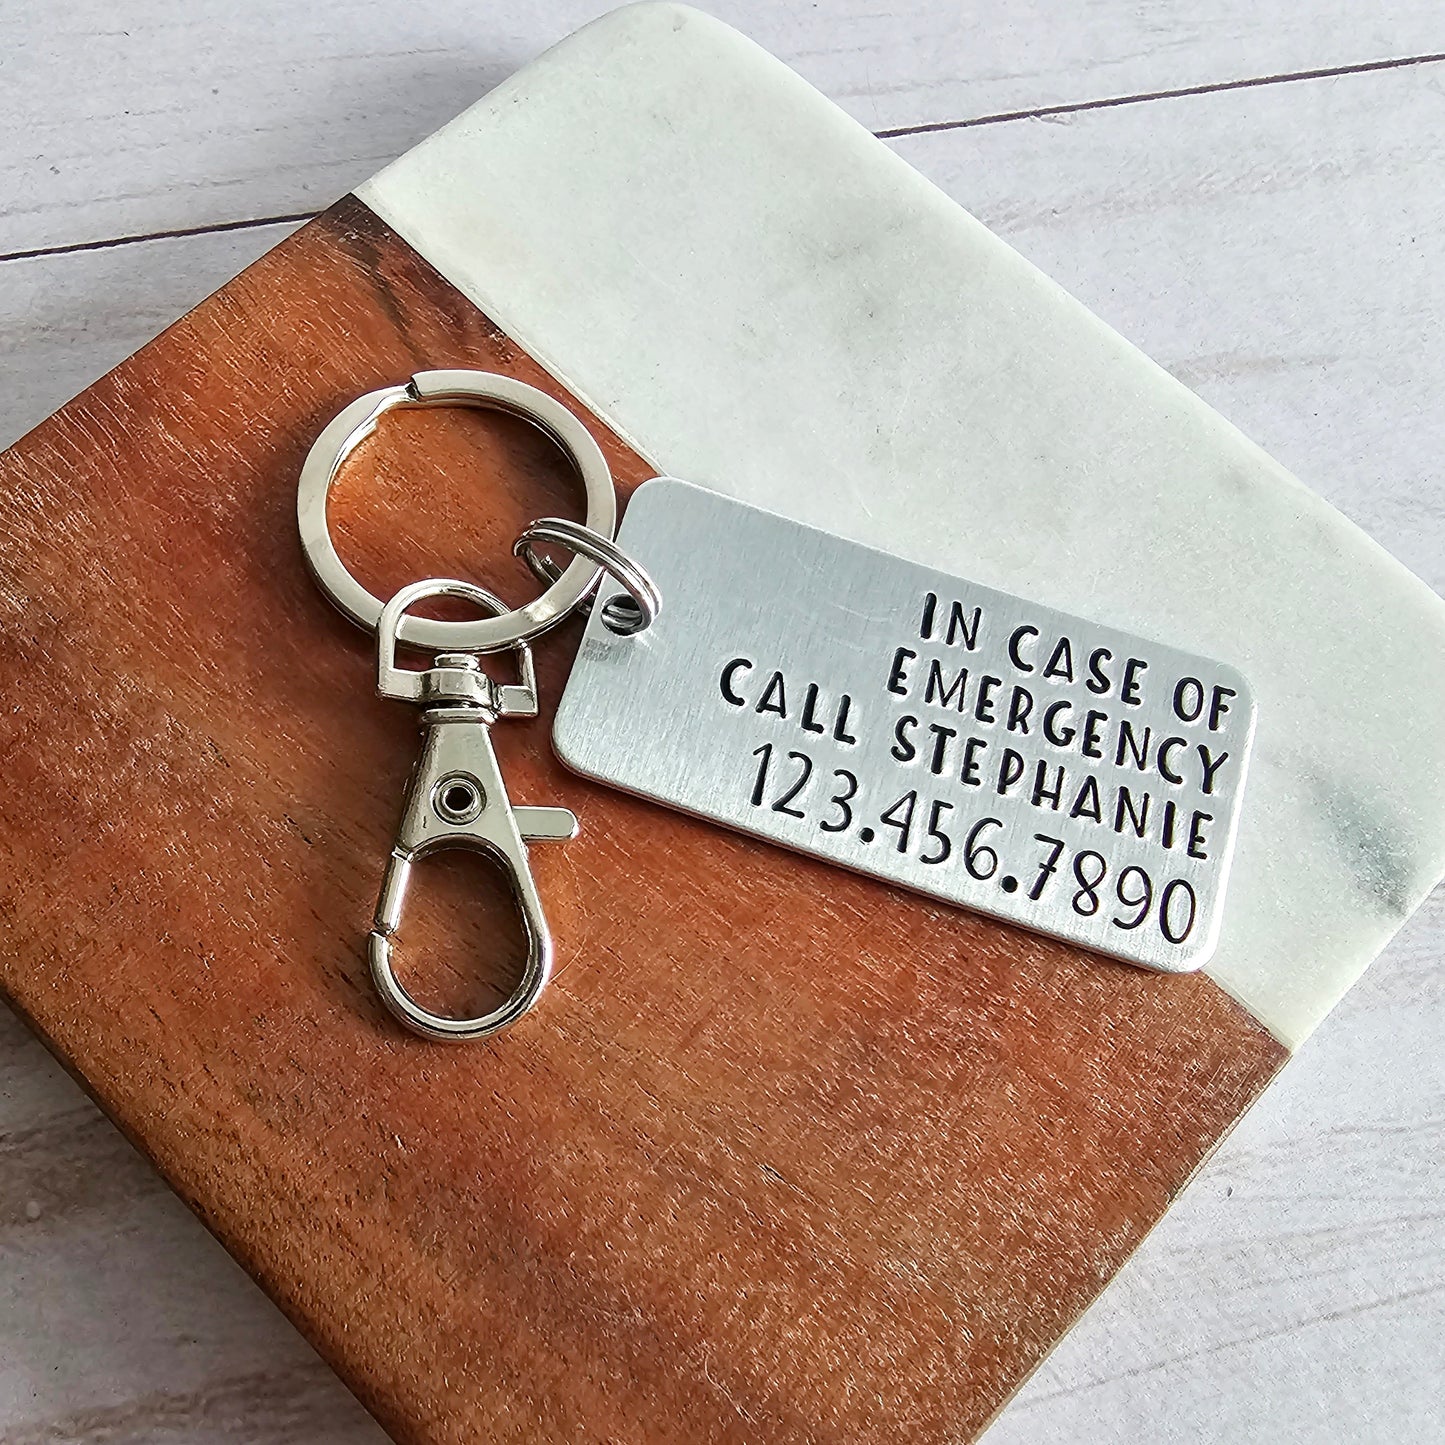 In Case of Emergency Call Keychain, Custom Metal Keychain, Keychain for Emergencies, Contact Information Key Chain, Children's Backpack Tag